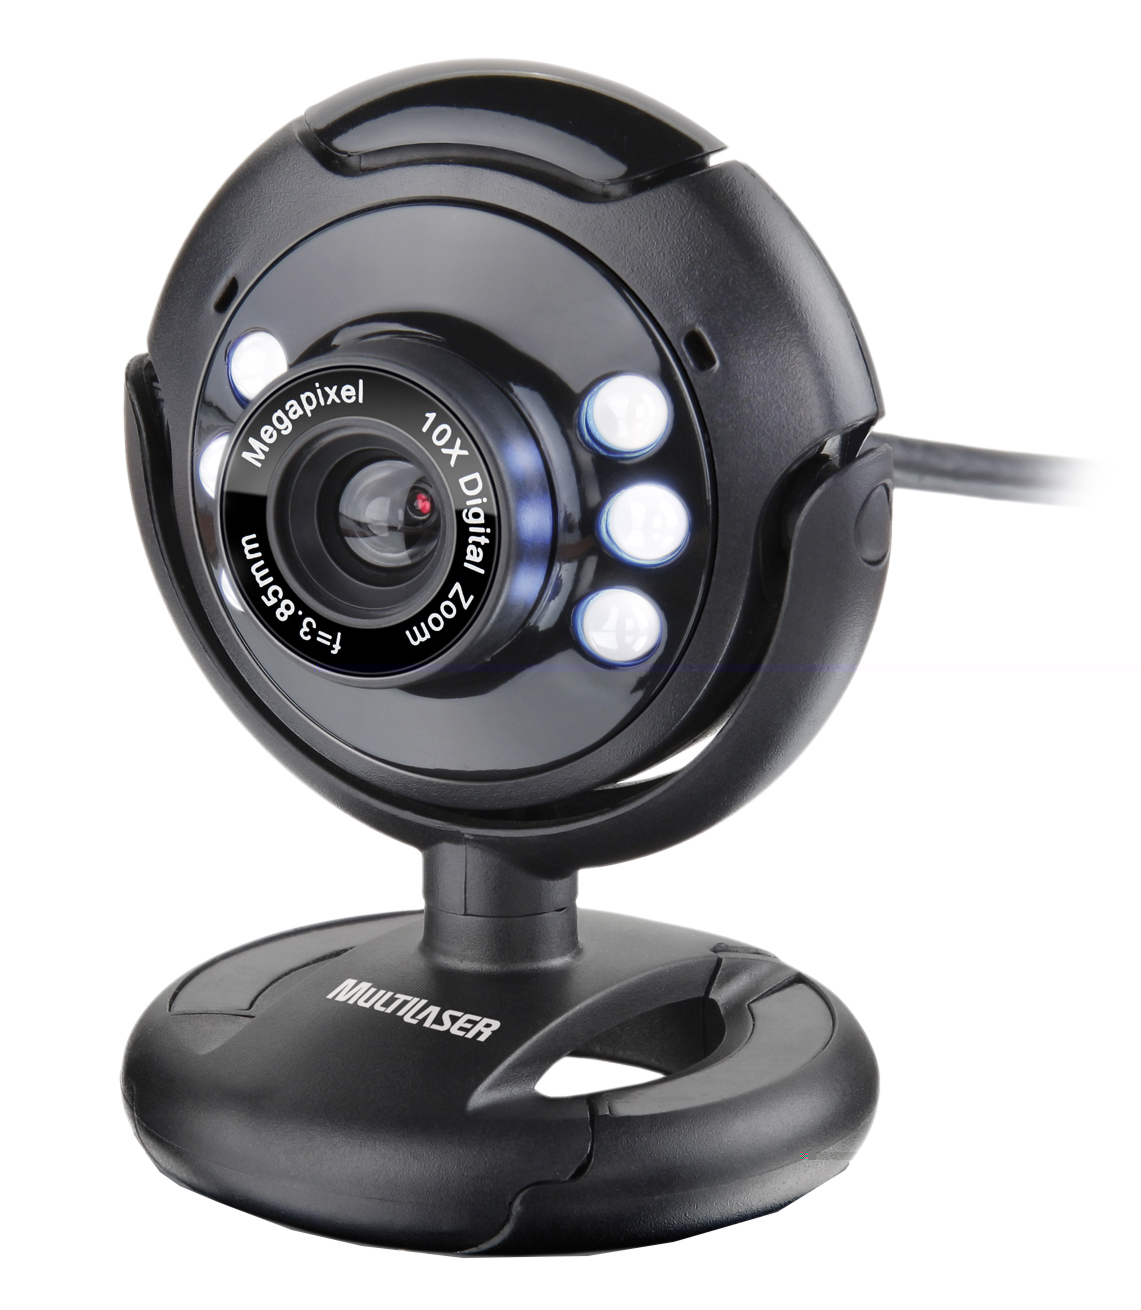 Web Câmera Multilaser Nightvision WC045 - com Microfone e LED